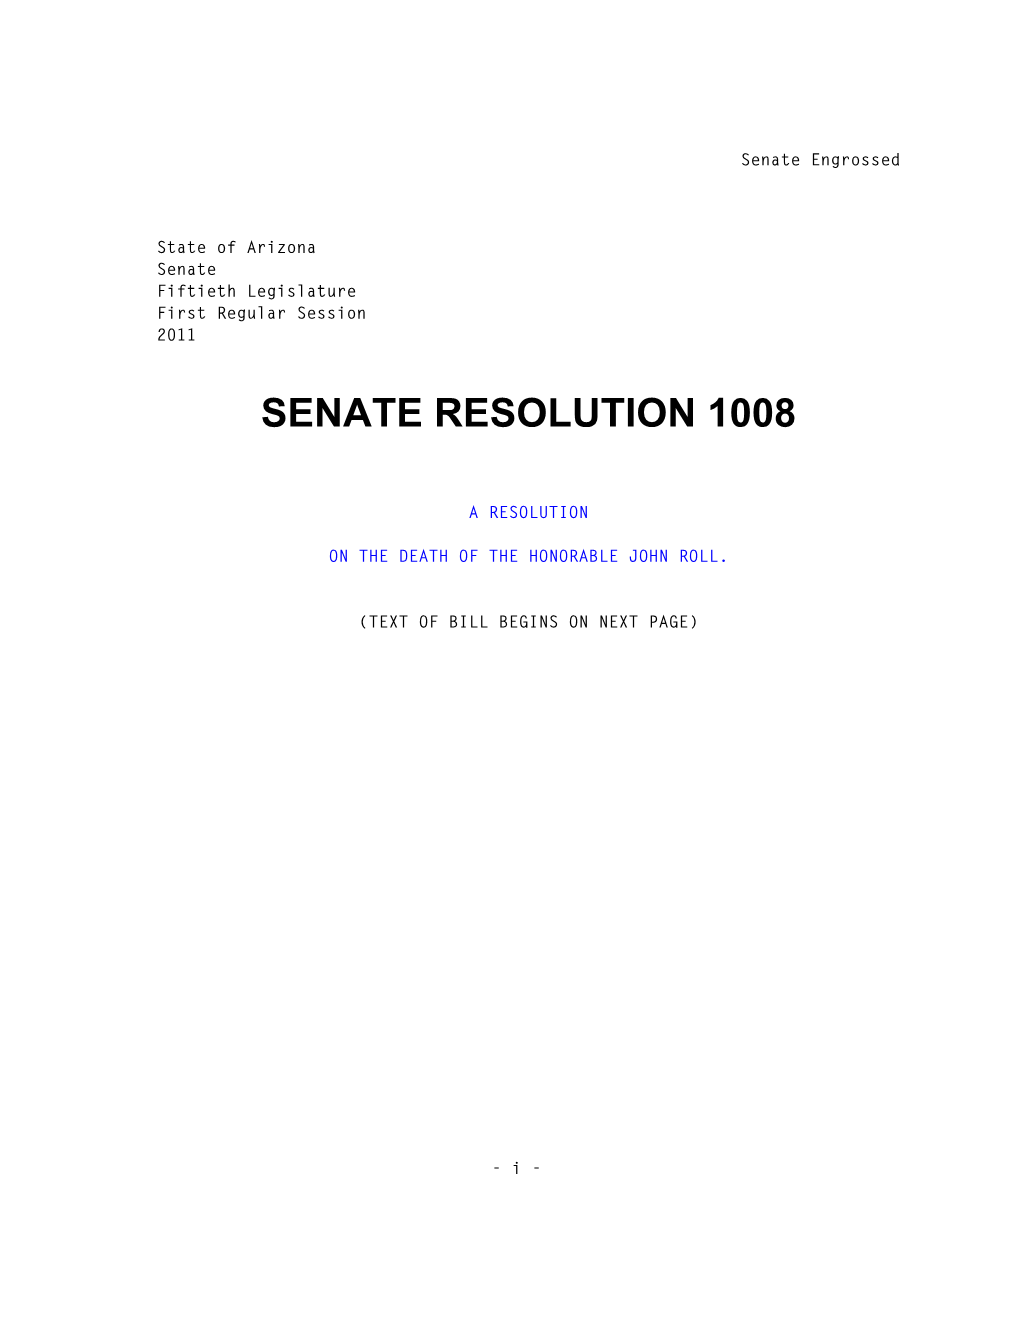 Senate Resolution 1008